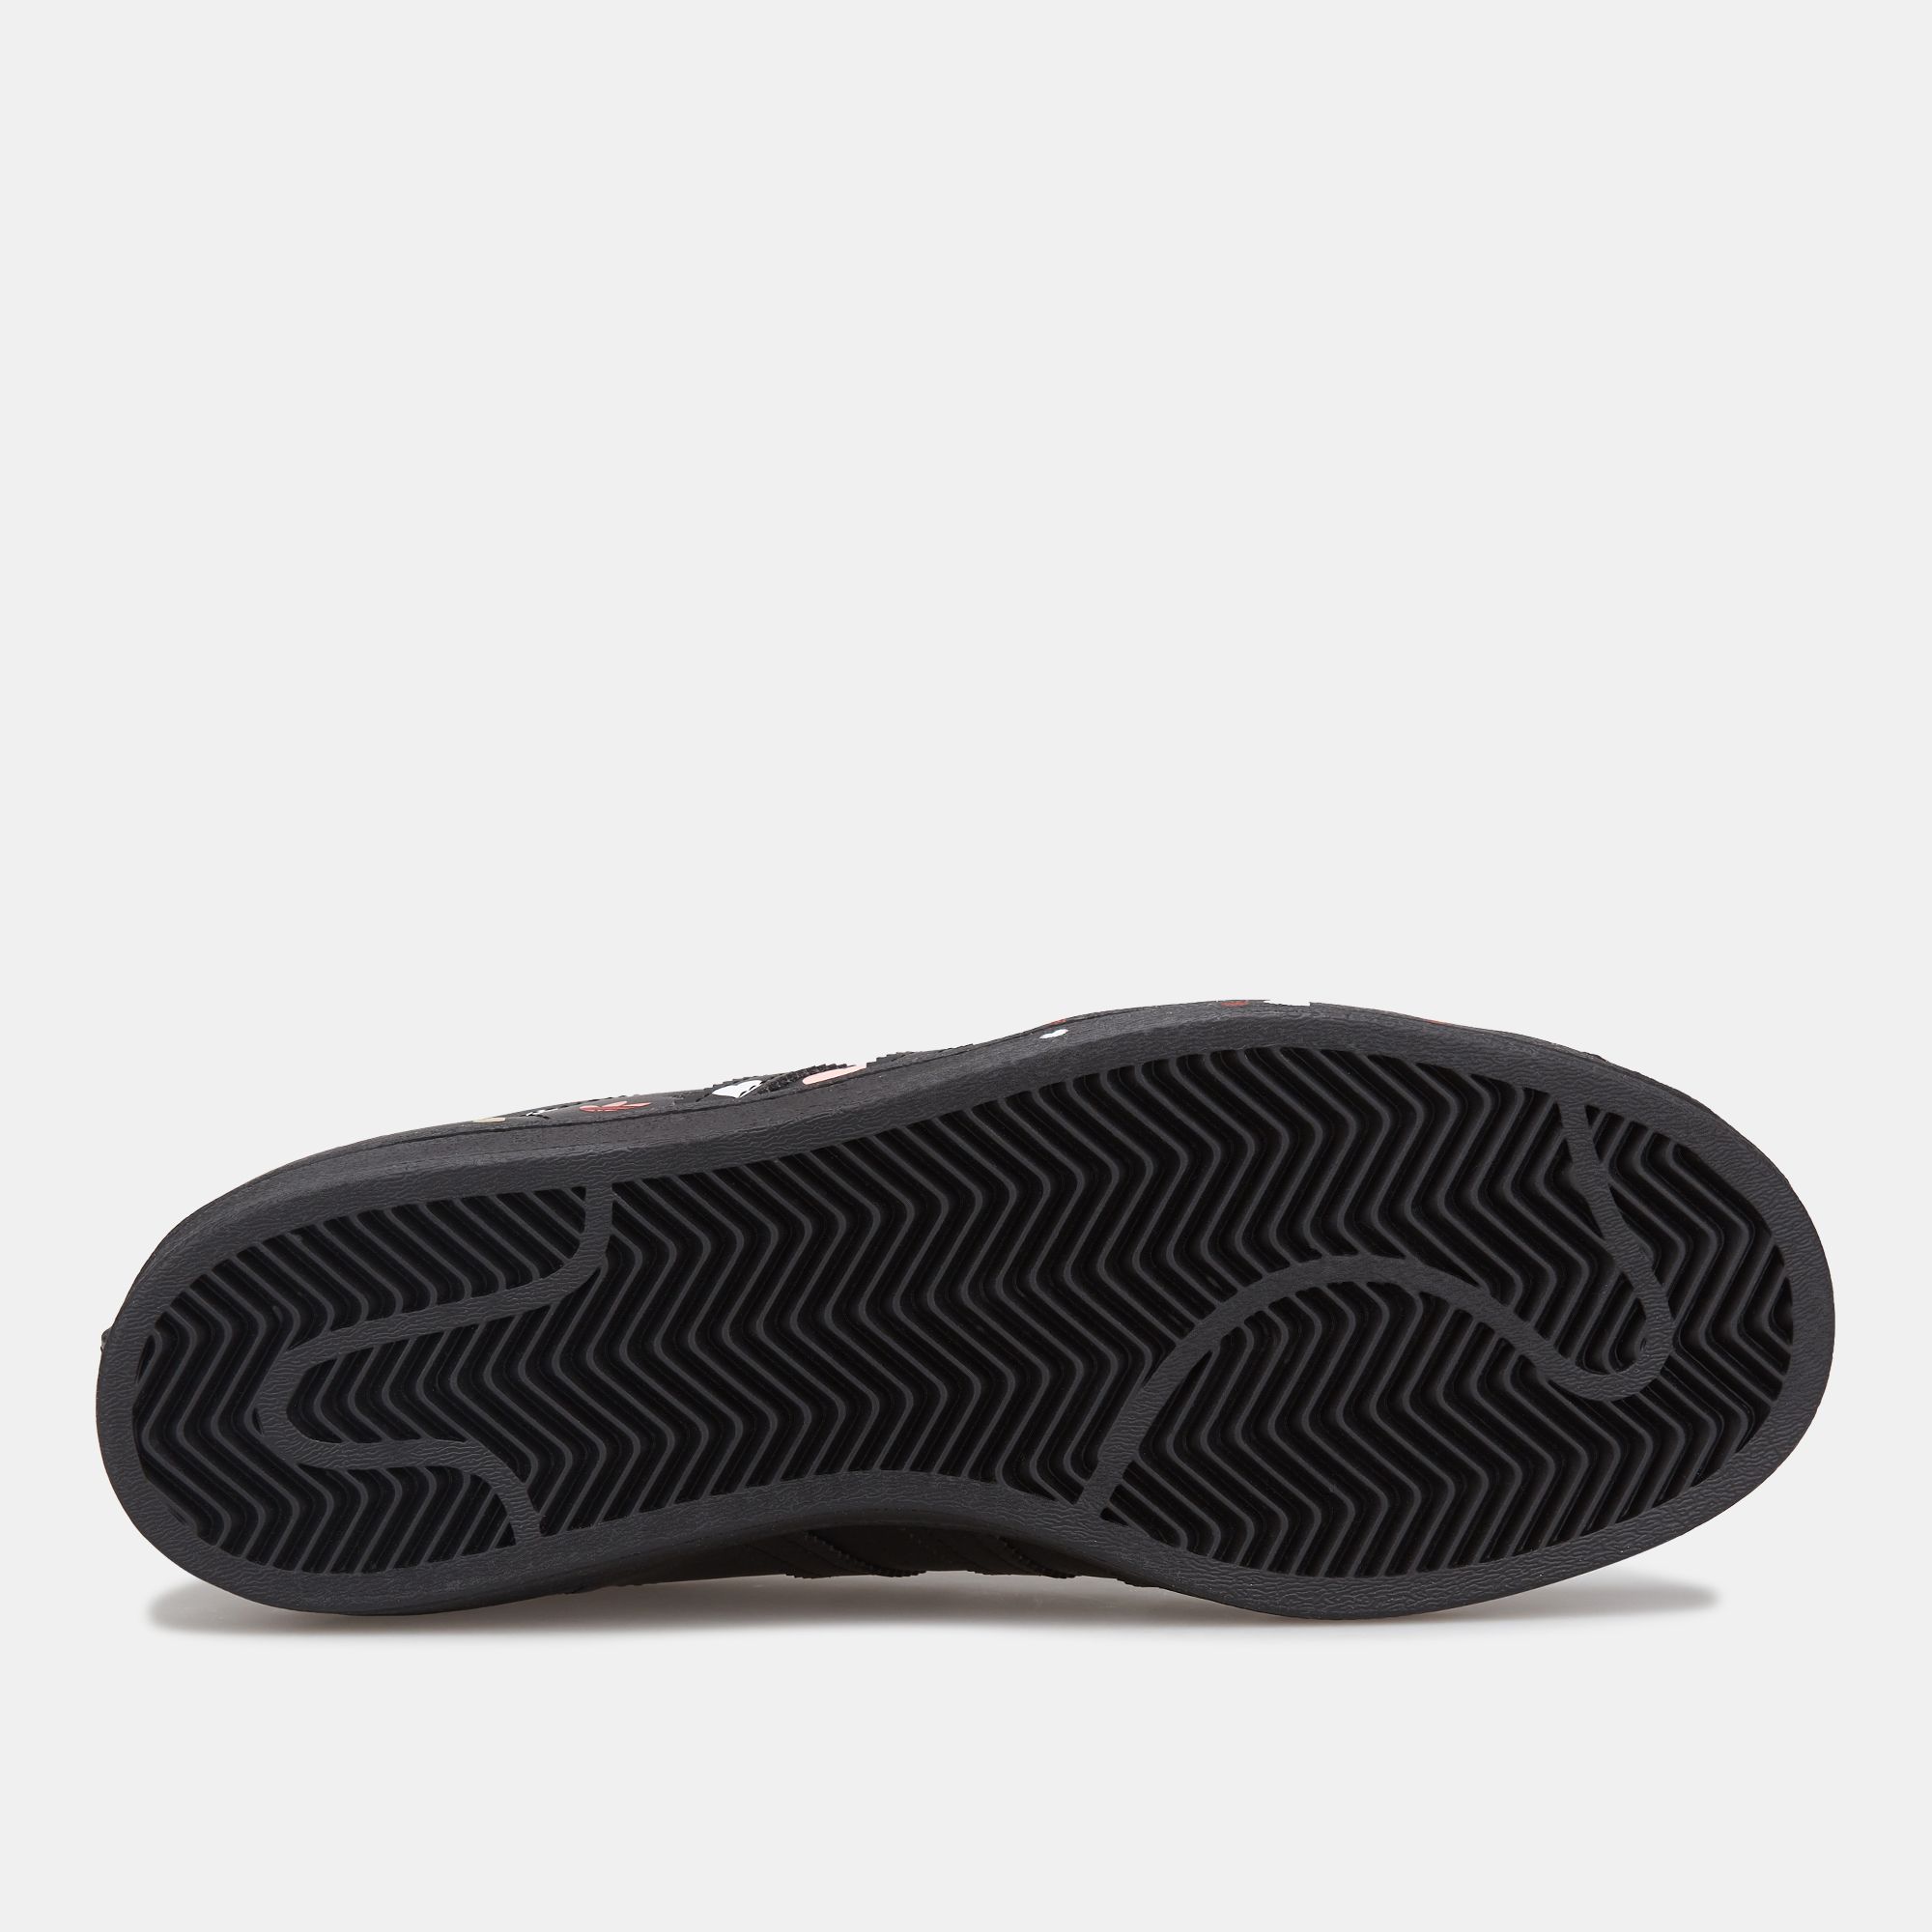 adidas Originals Women's Heart Print Superstar Shoe | Sneakers | Shoes ...